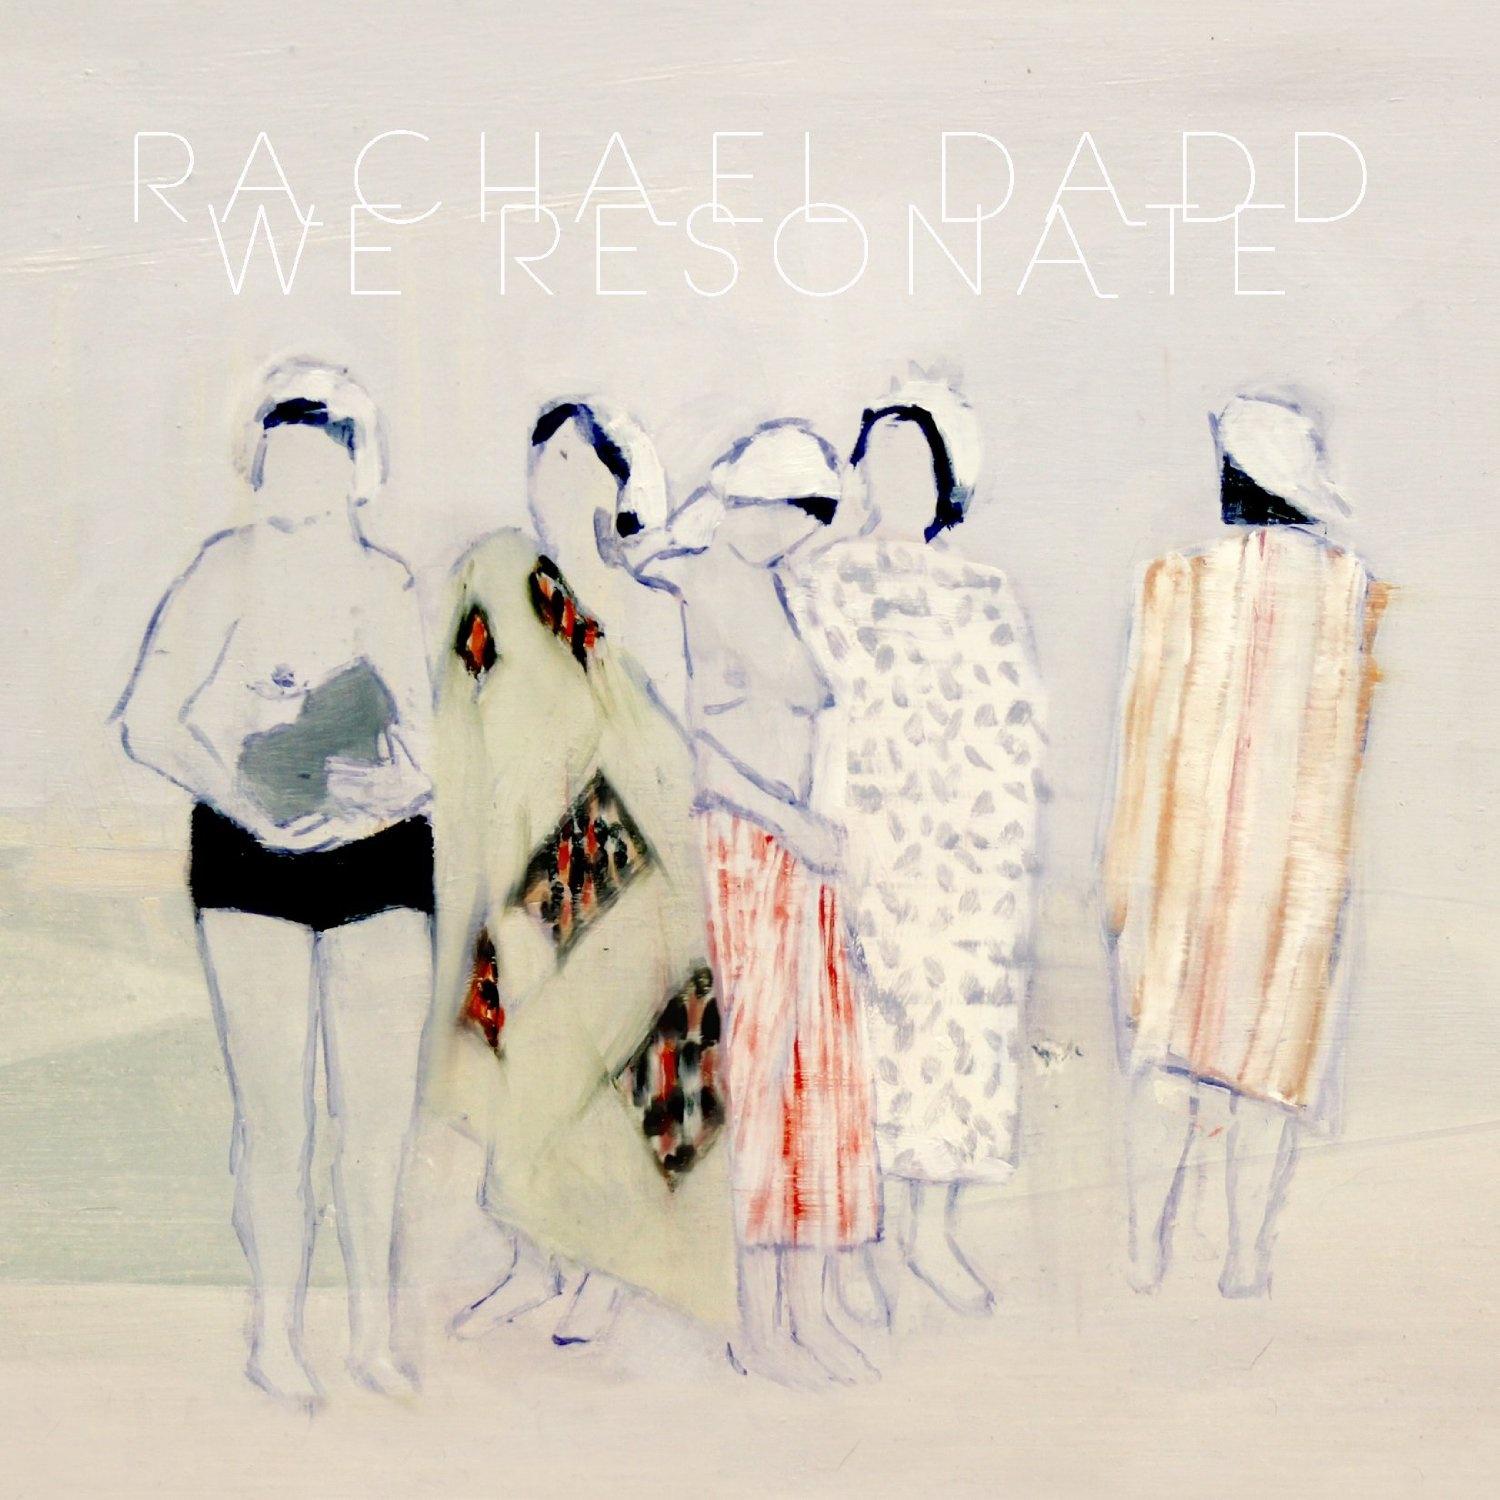 Rachael Dadd - Wake It